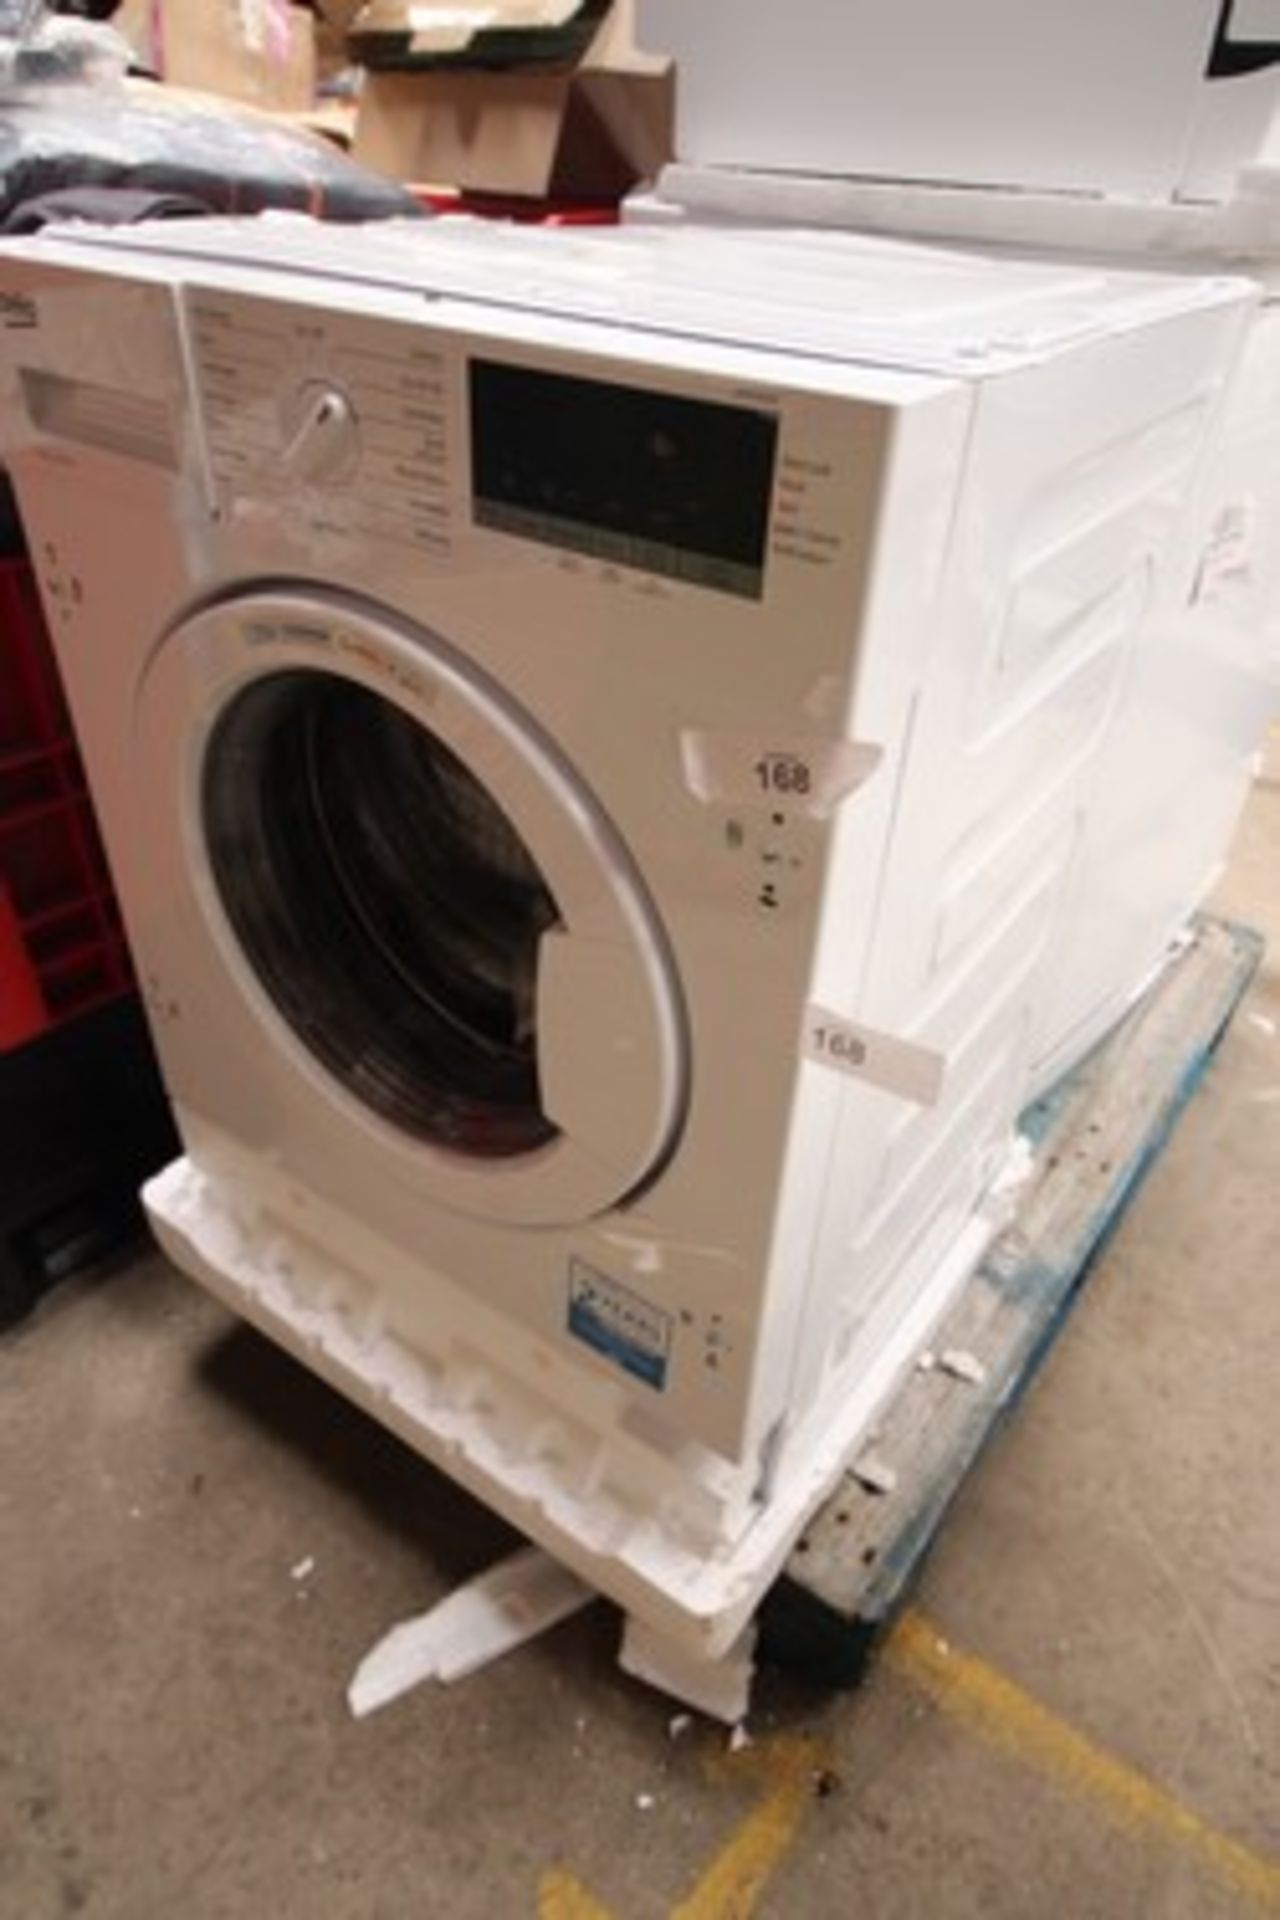 1 x Beko 7kg built in washing machine, Model WTIK74151F - New (eBay 1)